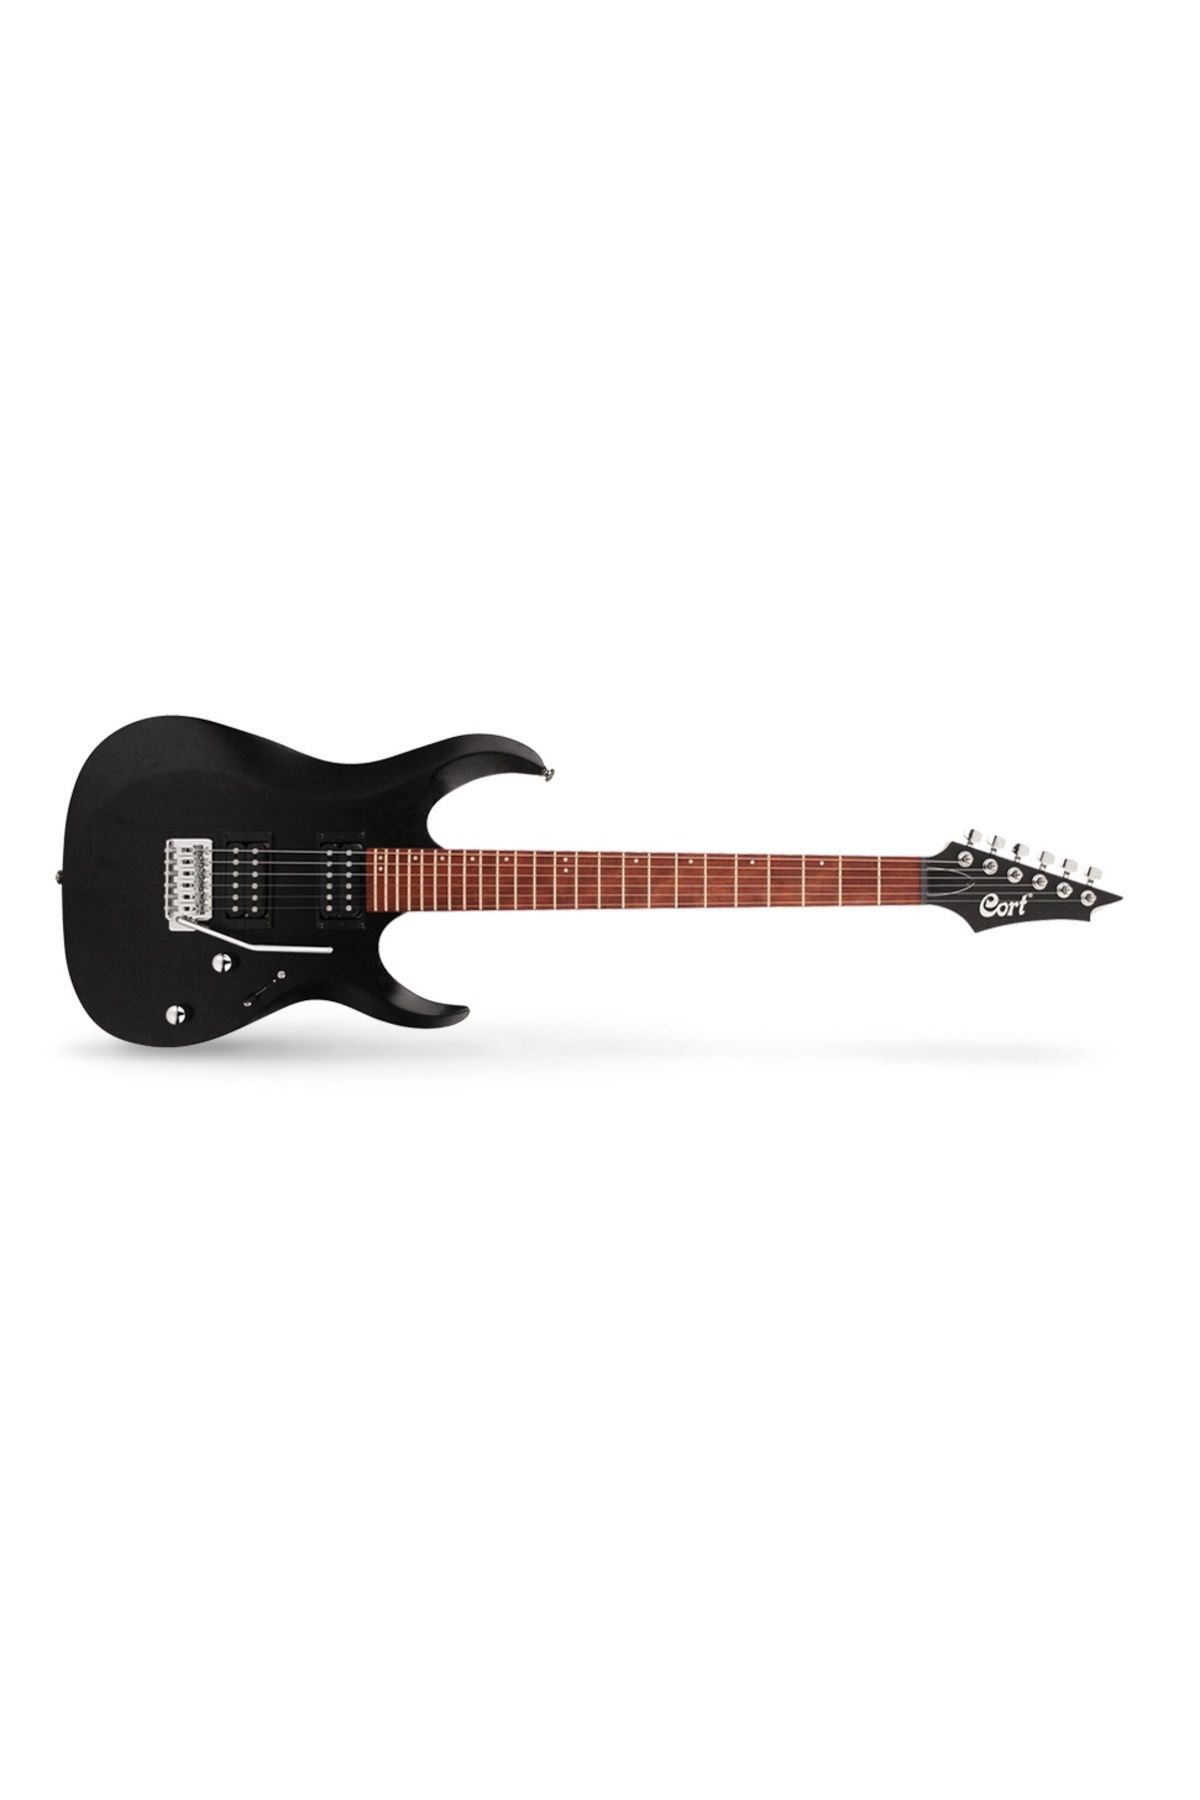 Cort X100 Opbk Elektro Gitar , Open Pore Black , (H-H) X Series X100 Electric Guitar, Open Pore